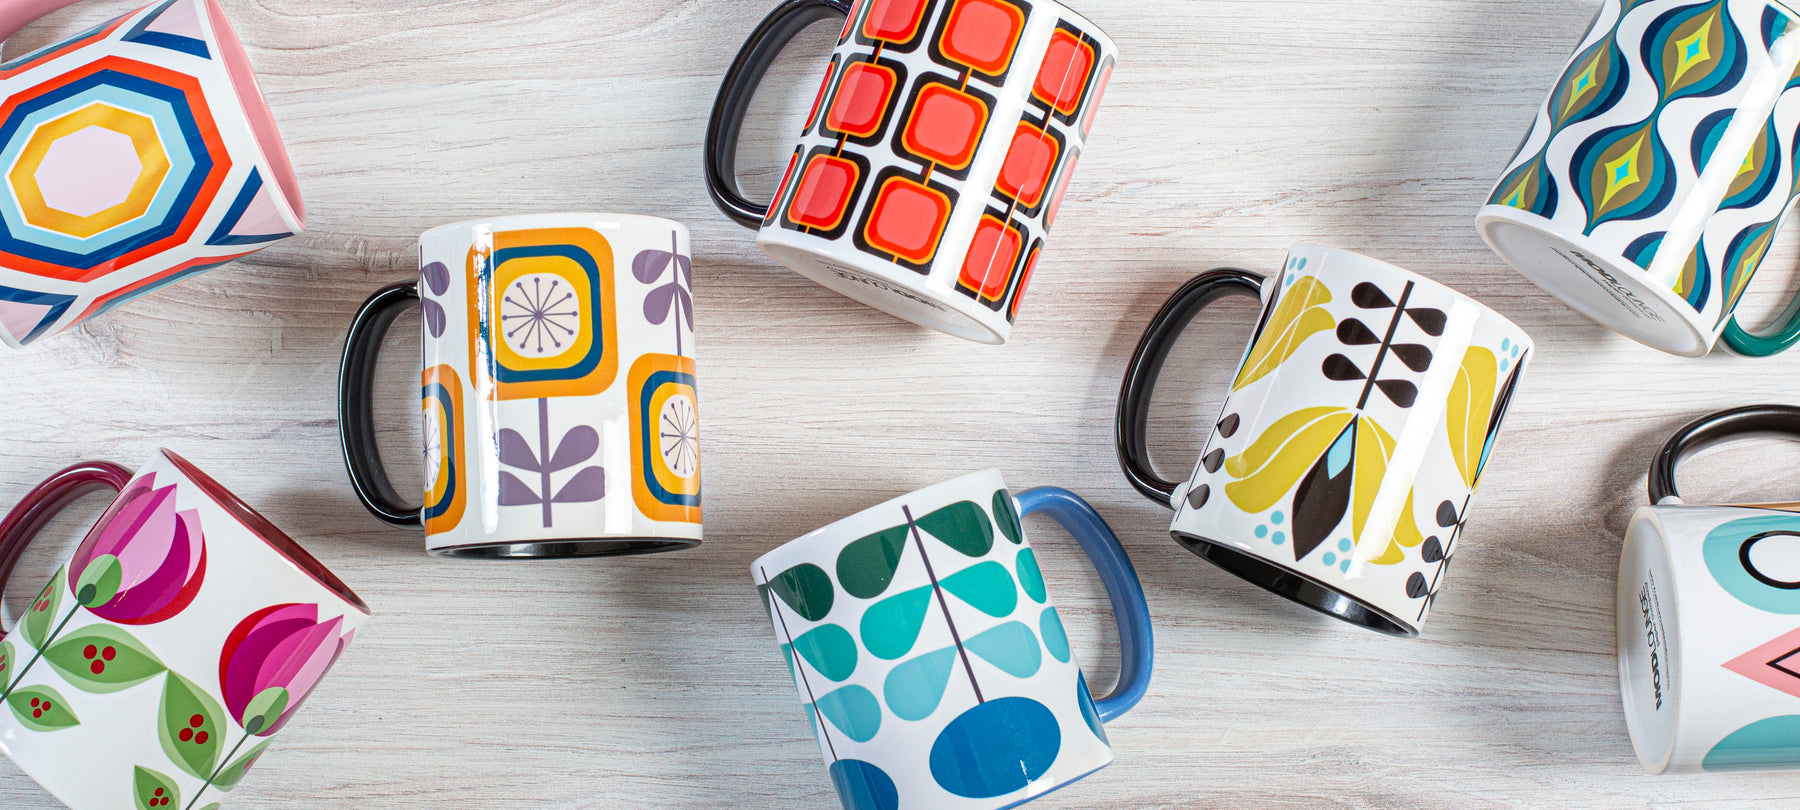 11 oz ceramic vintage mid century modern coffee mugs with danish, floral and geometric designs